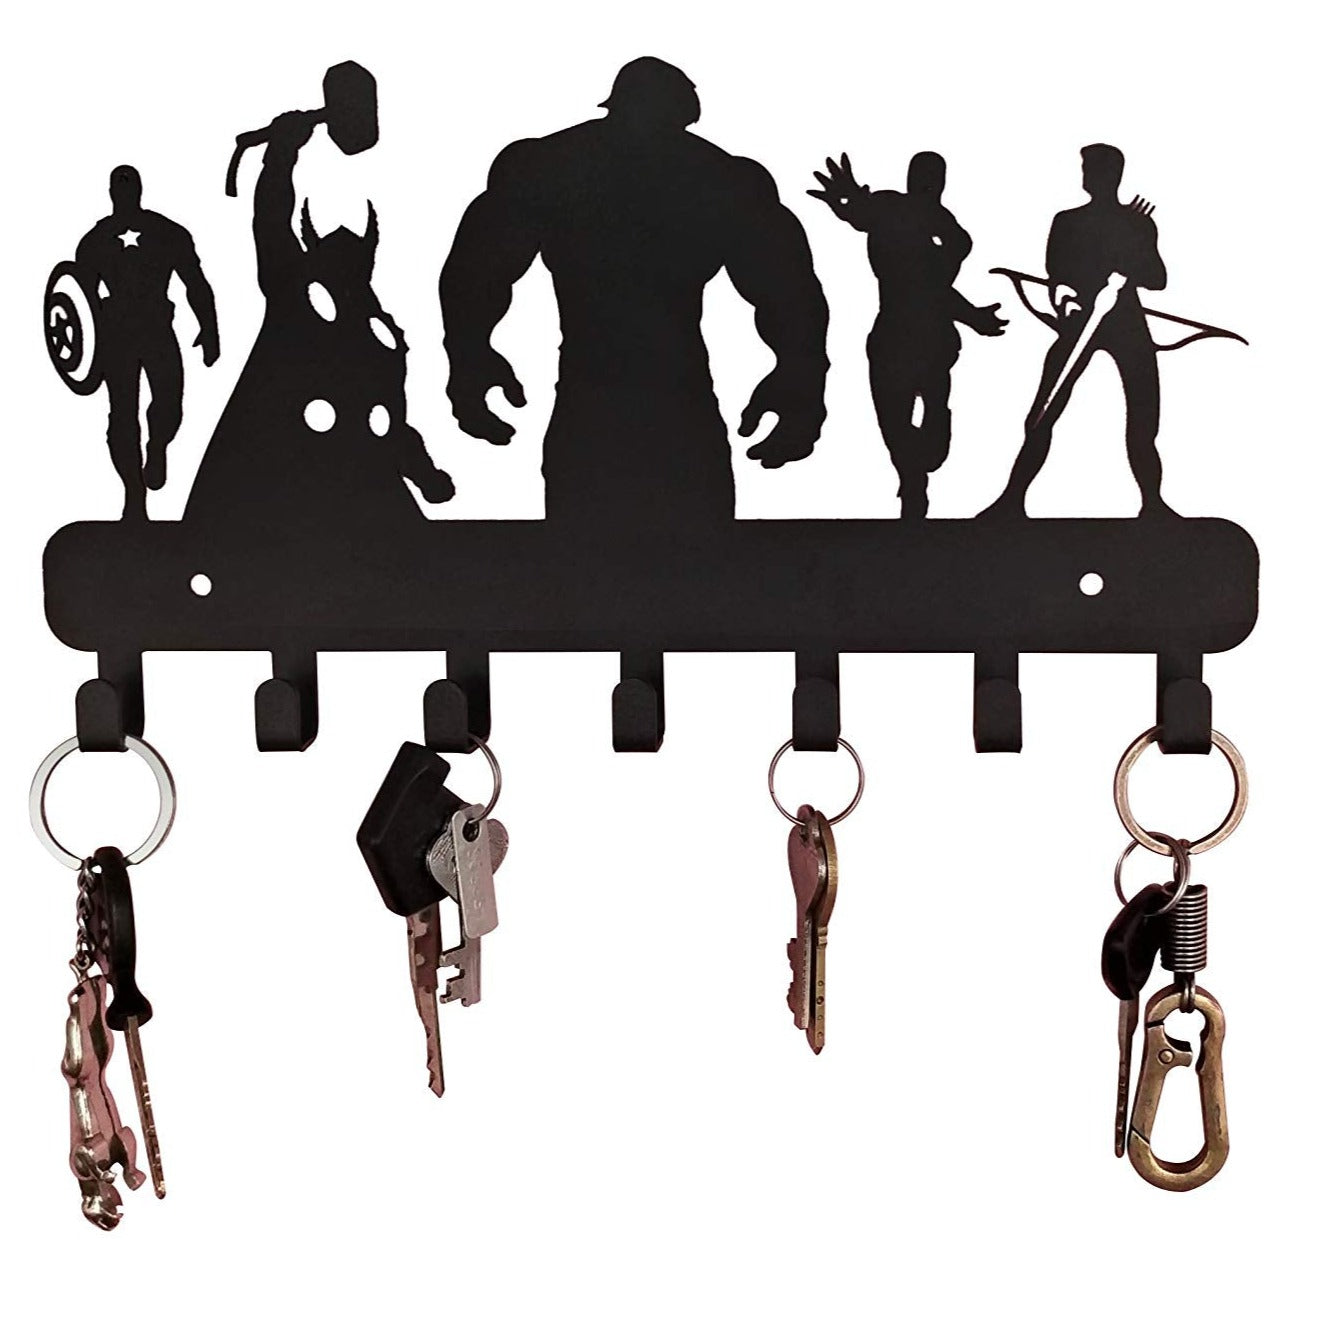 Assemble - Key holder